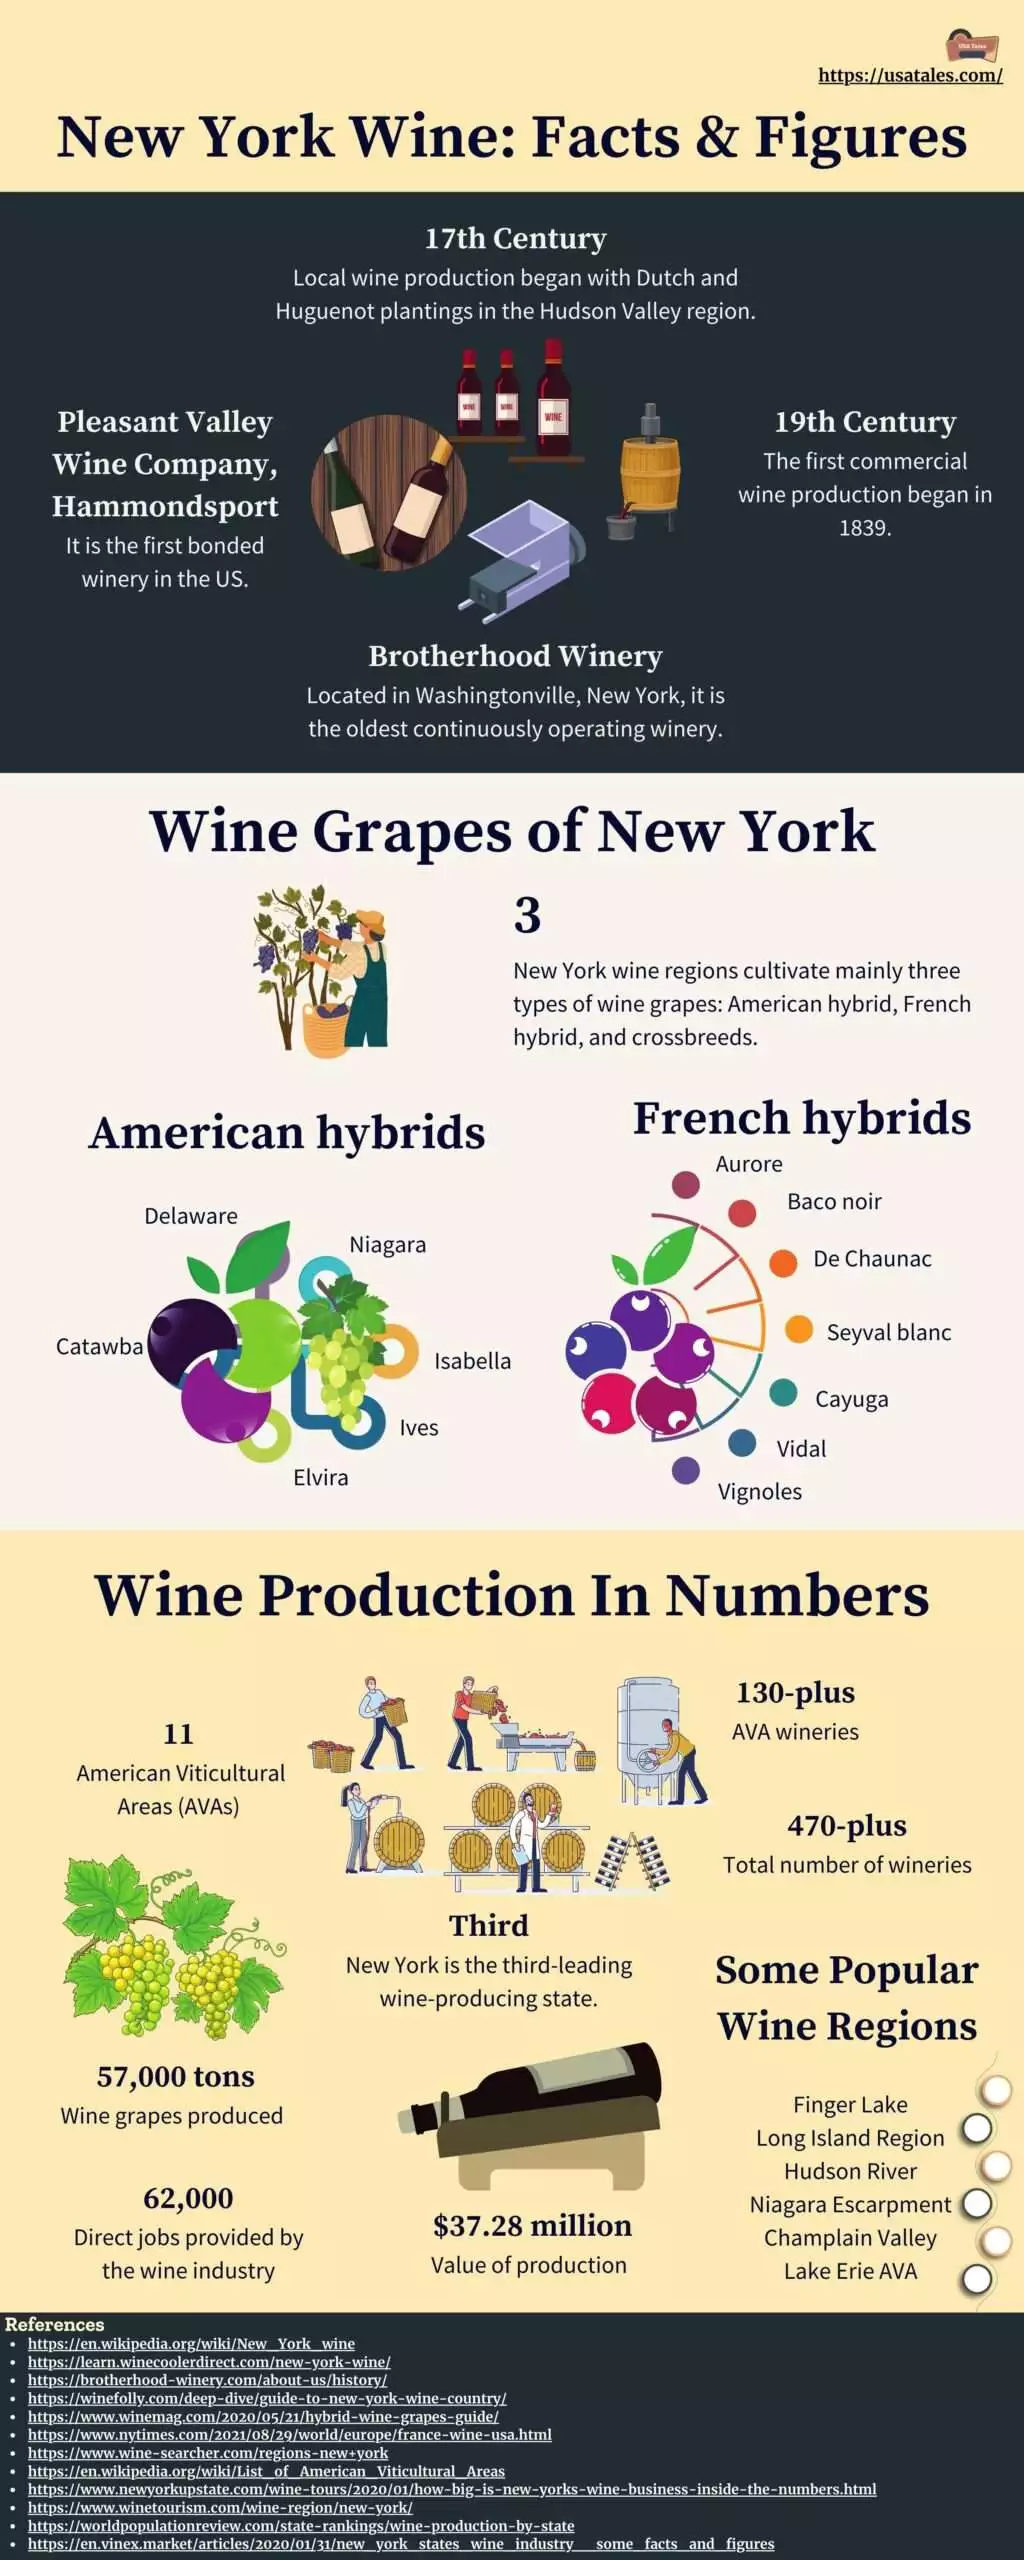 New York Wine Facts & Figures